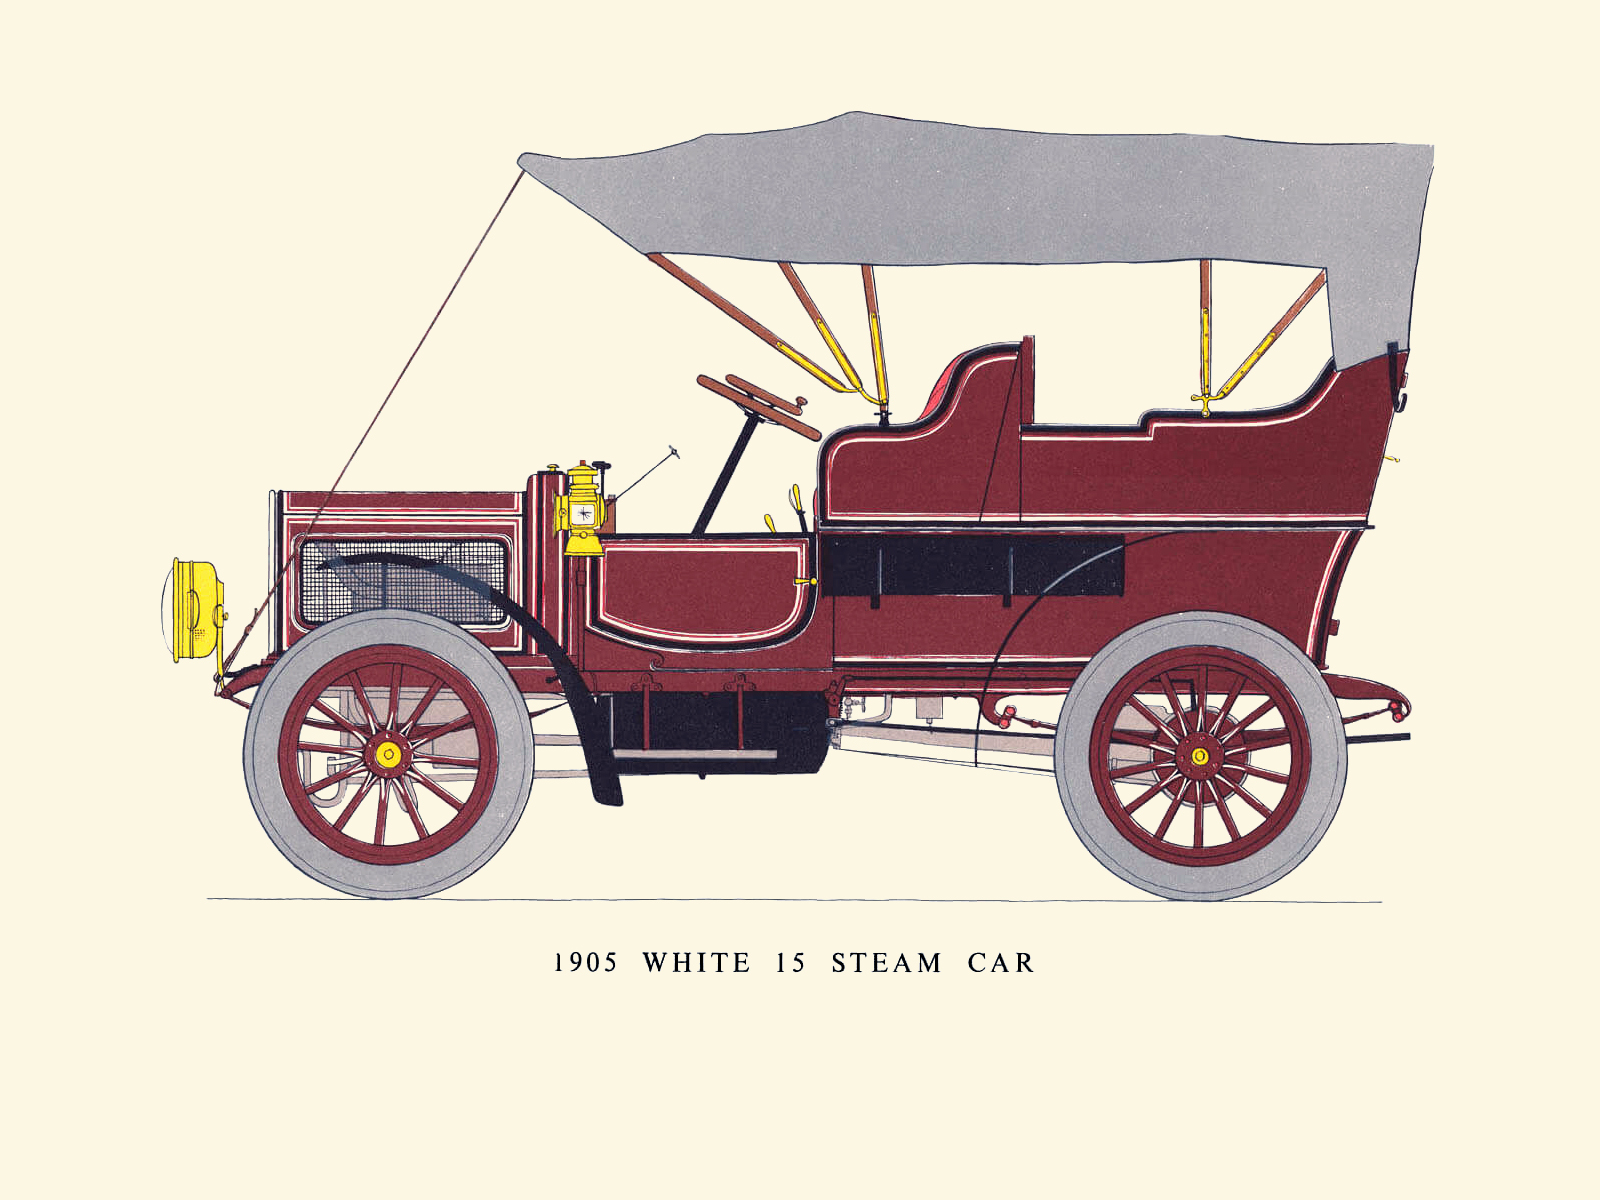 1905 White 15 Steam Car Rear-Entrance Tonneau body by Cann Limited, London, England: Drawn by George Oliver